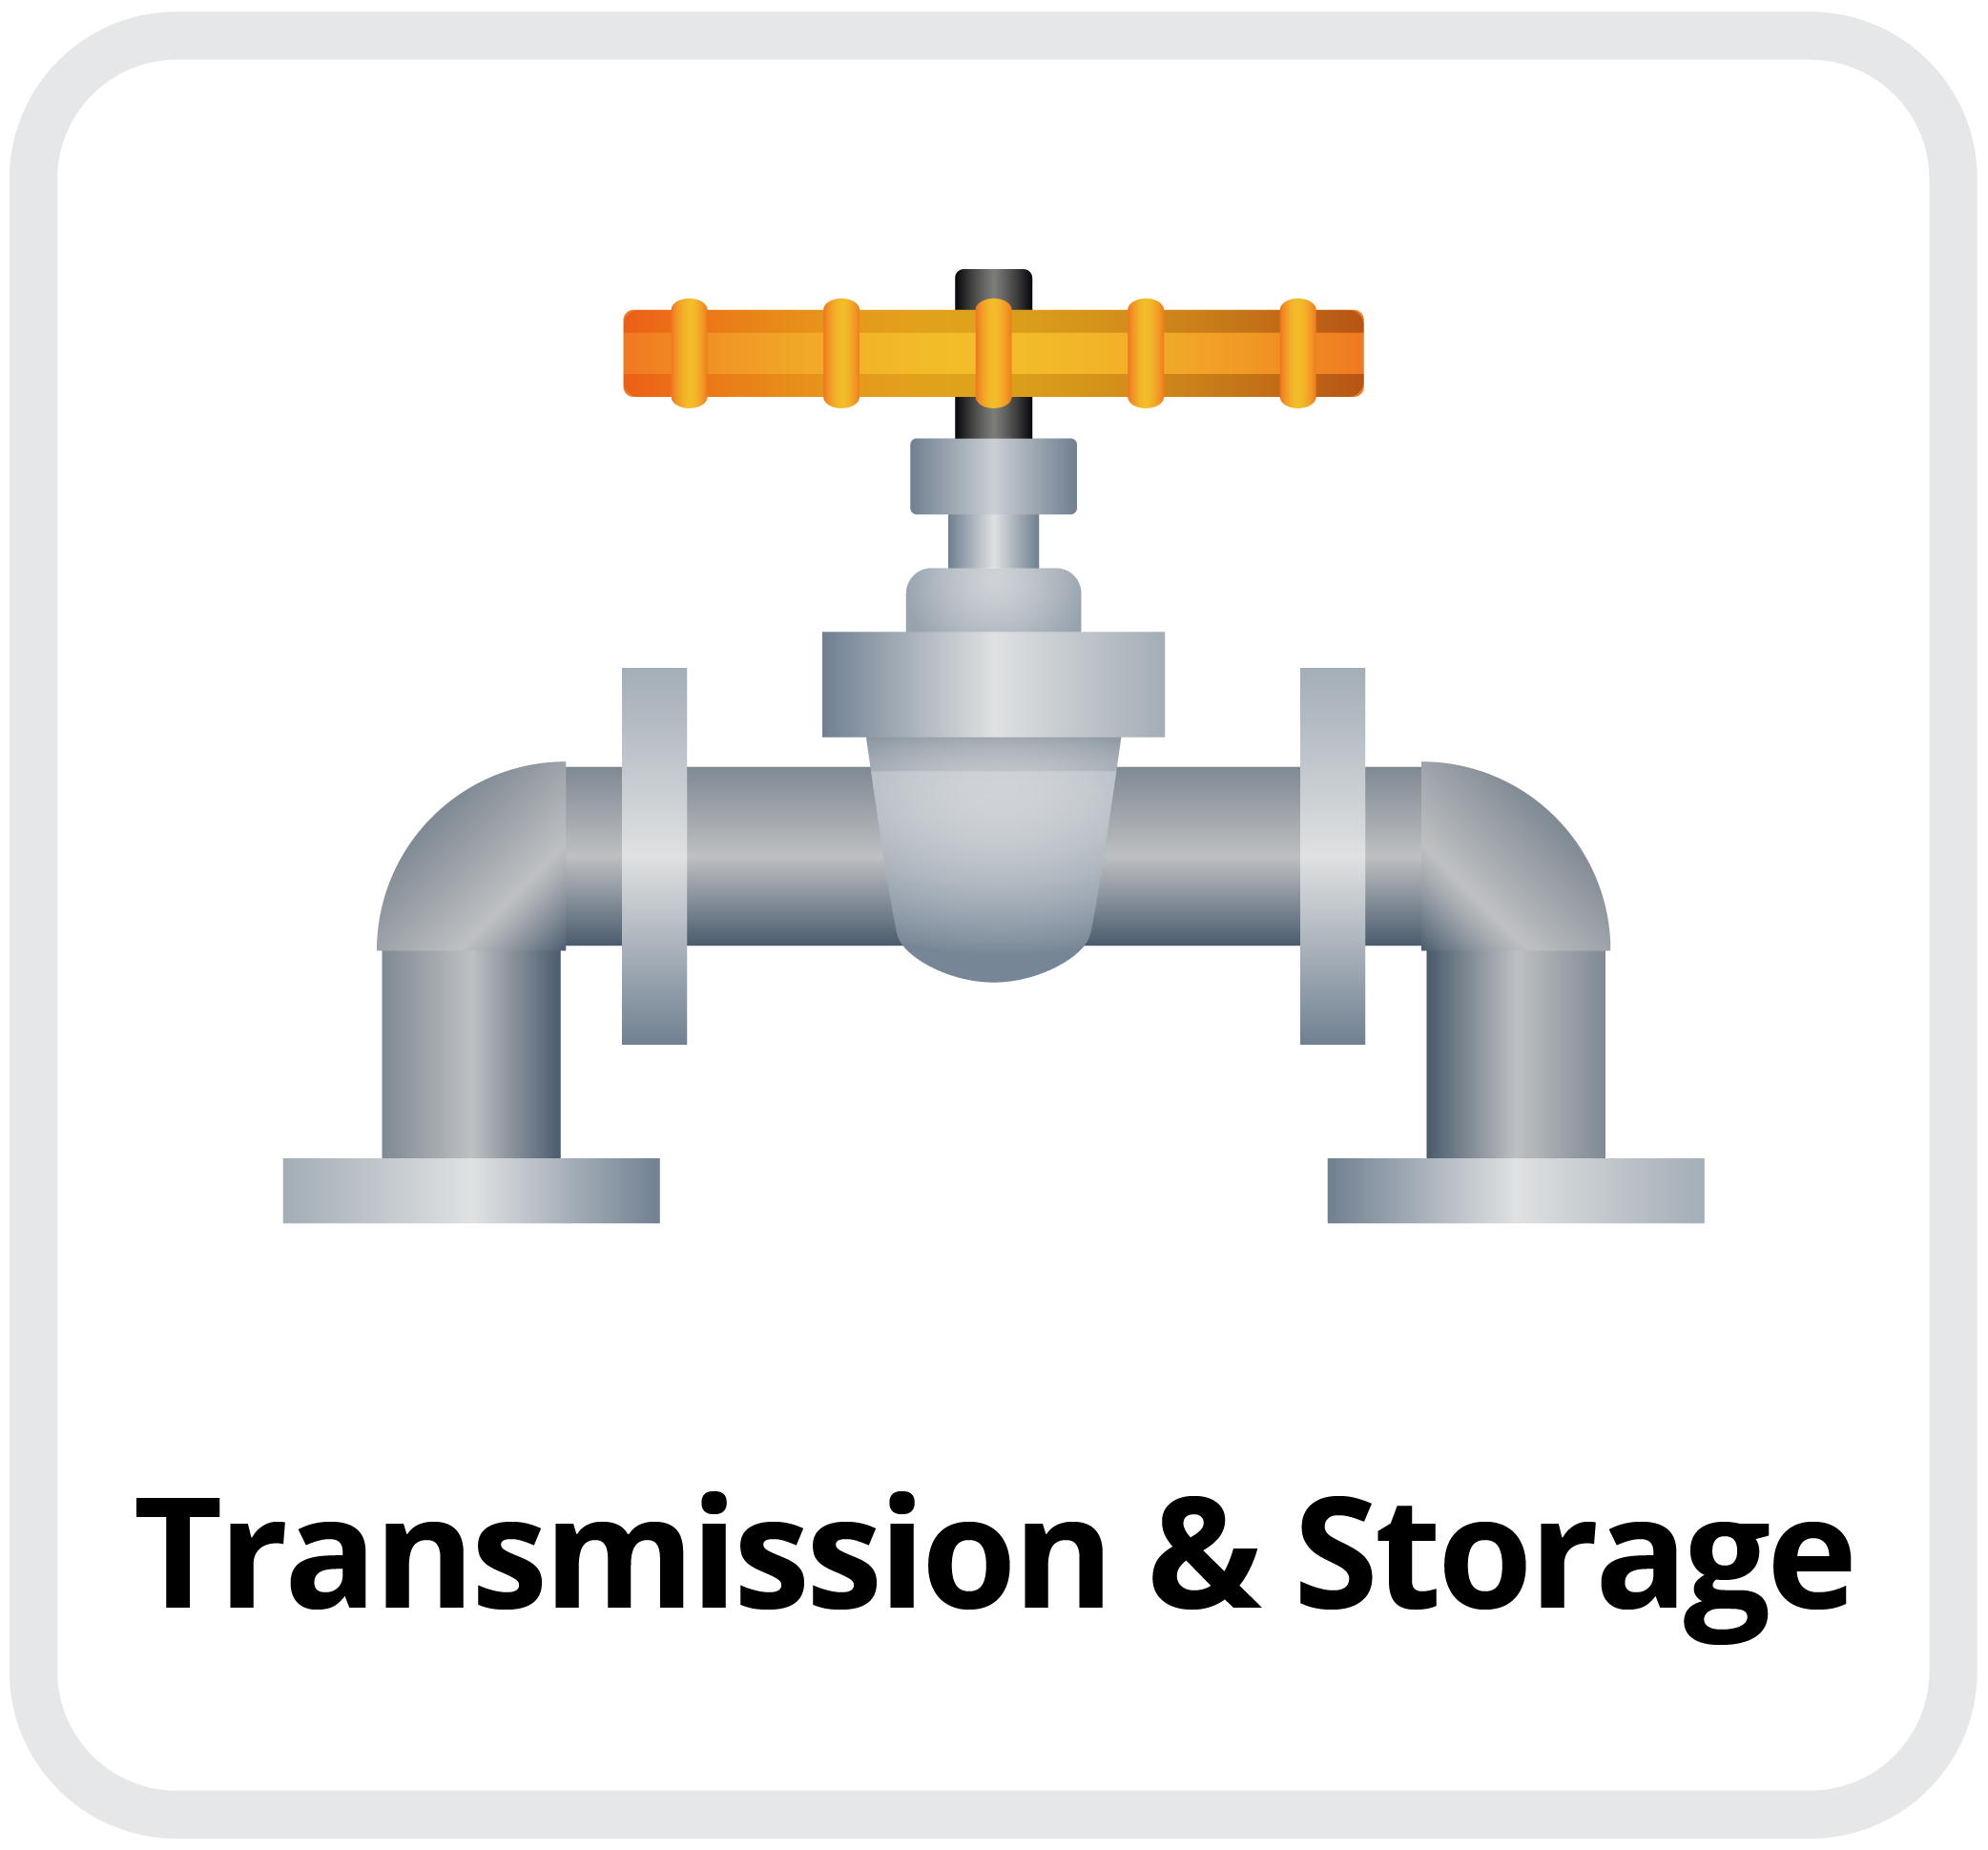 transmission-storage-icon